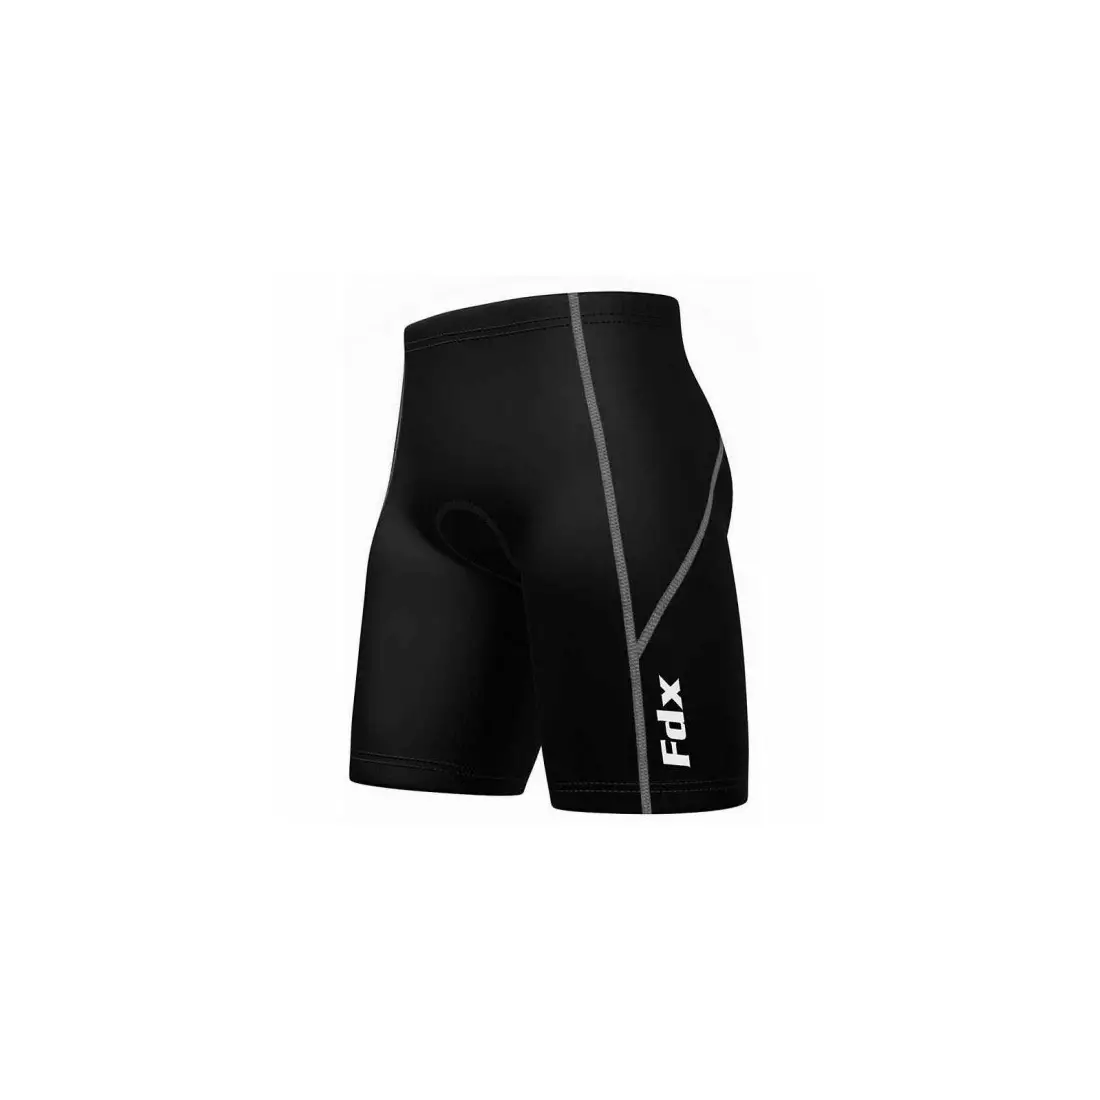 FDX 1600 men's cycling shorts, black - gray seam